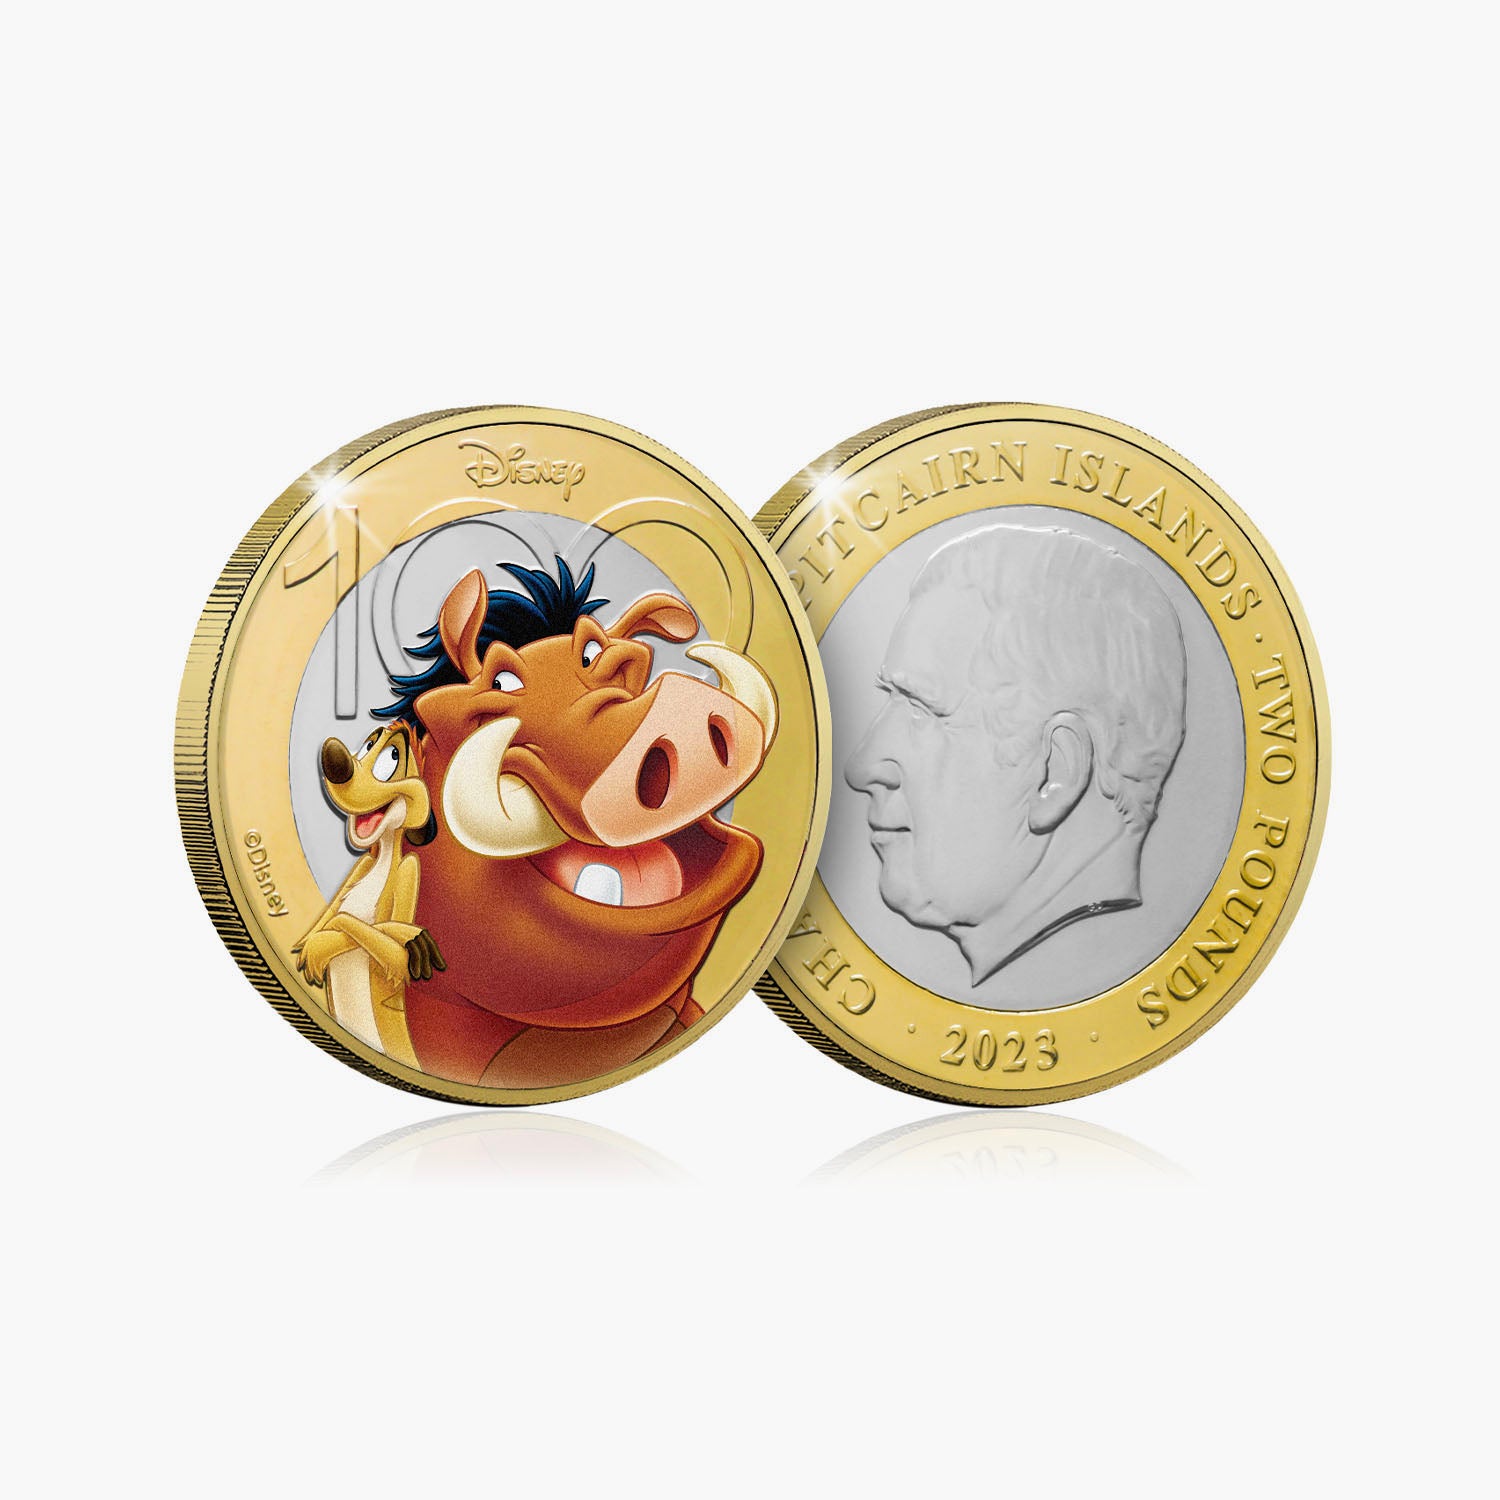 Disney 100th Anniversary Lion King 2023 £2 BU Color Coin